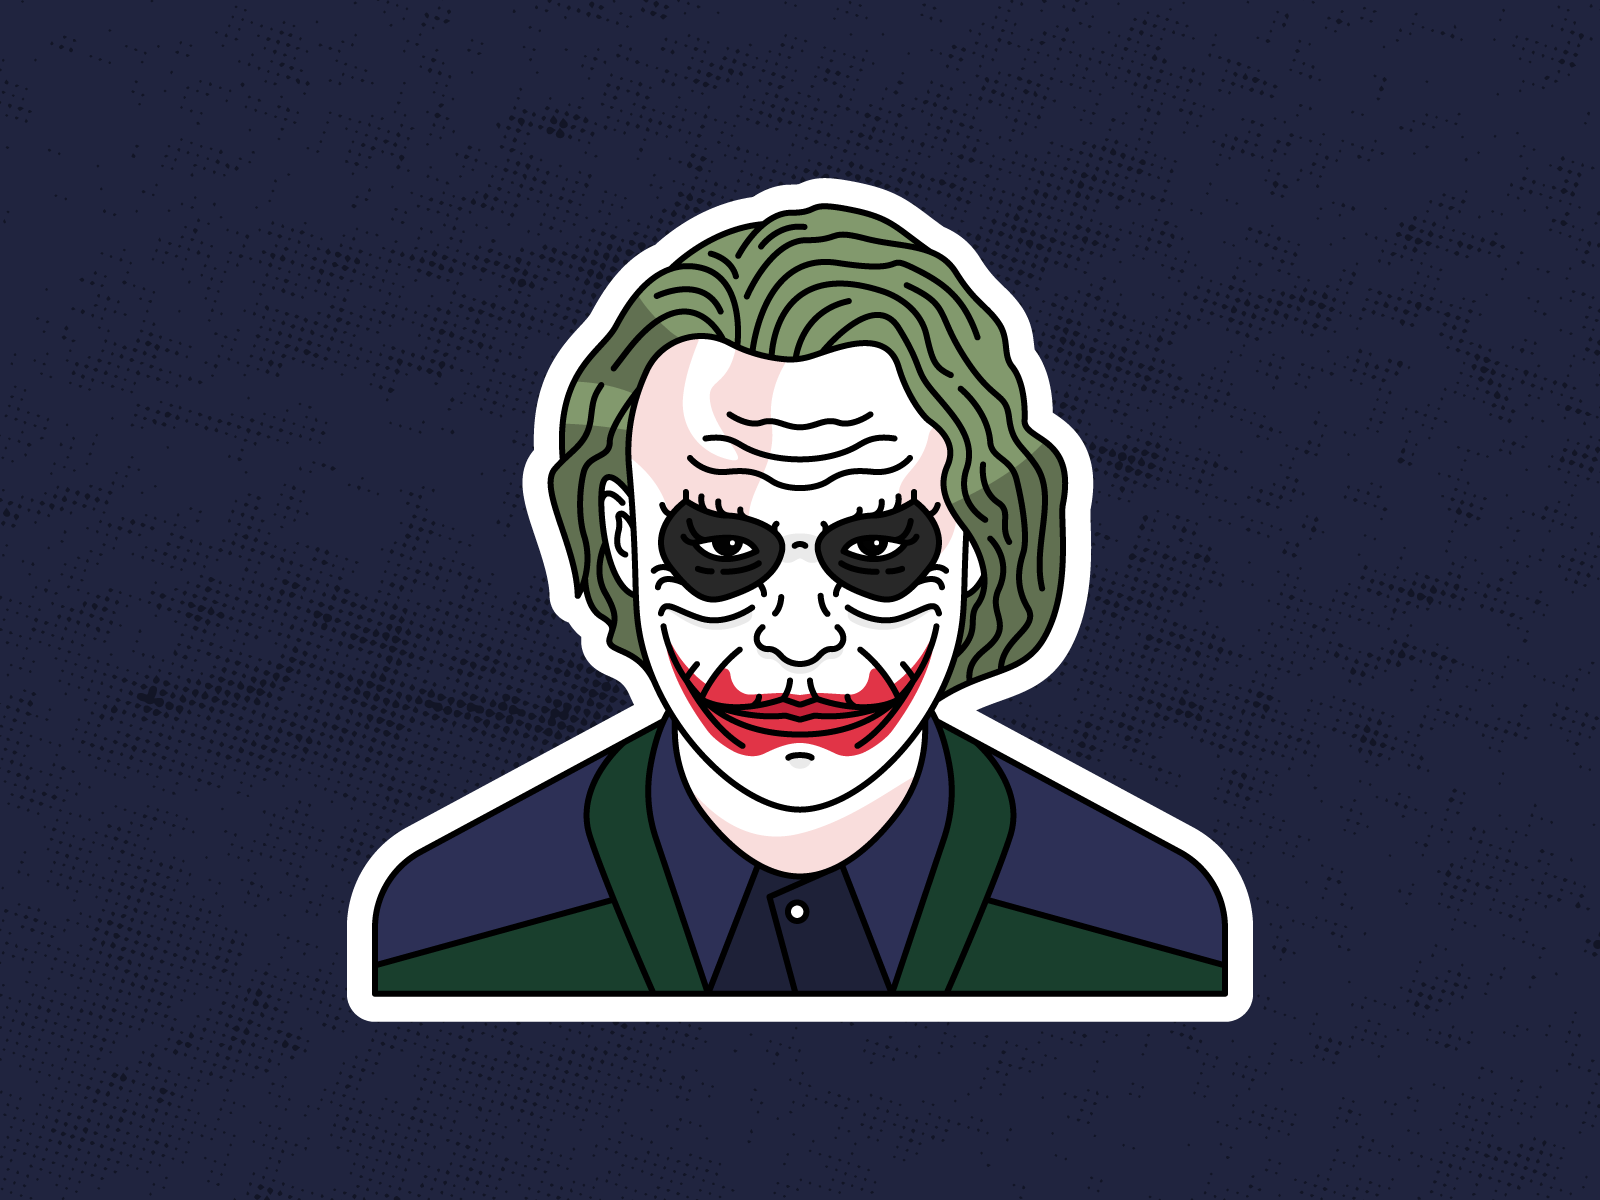 Joker | Heath Ledger by Natalie Mkrtumian on Dribbble